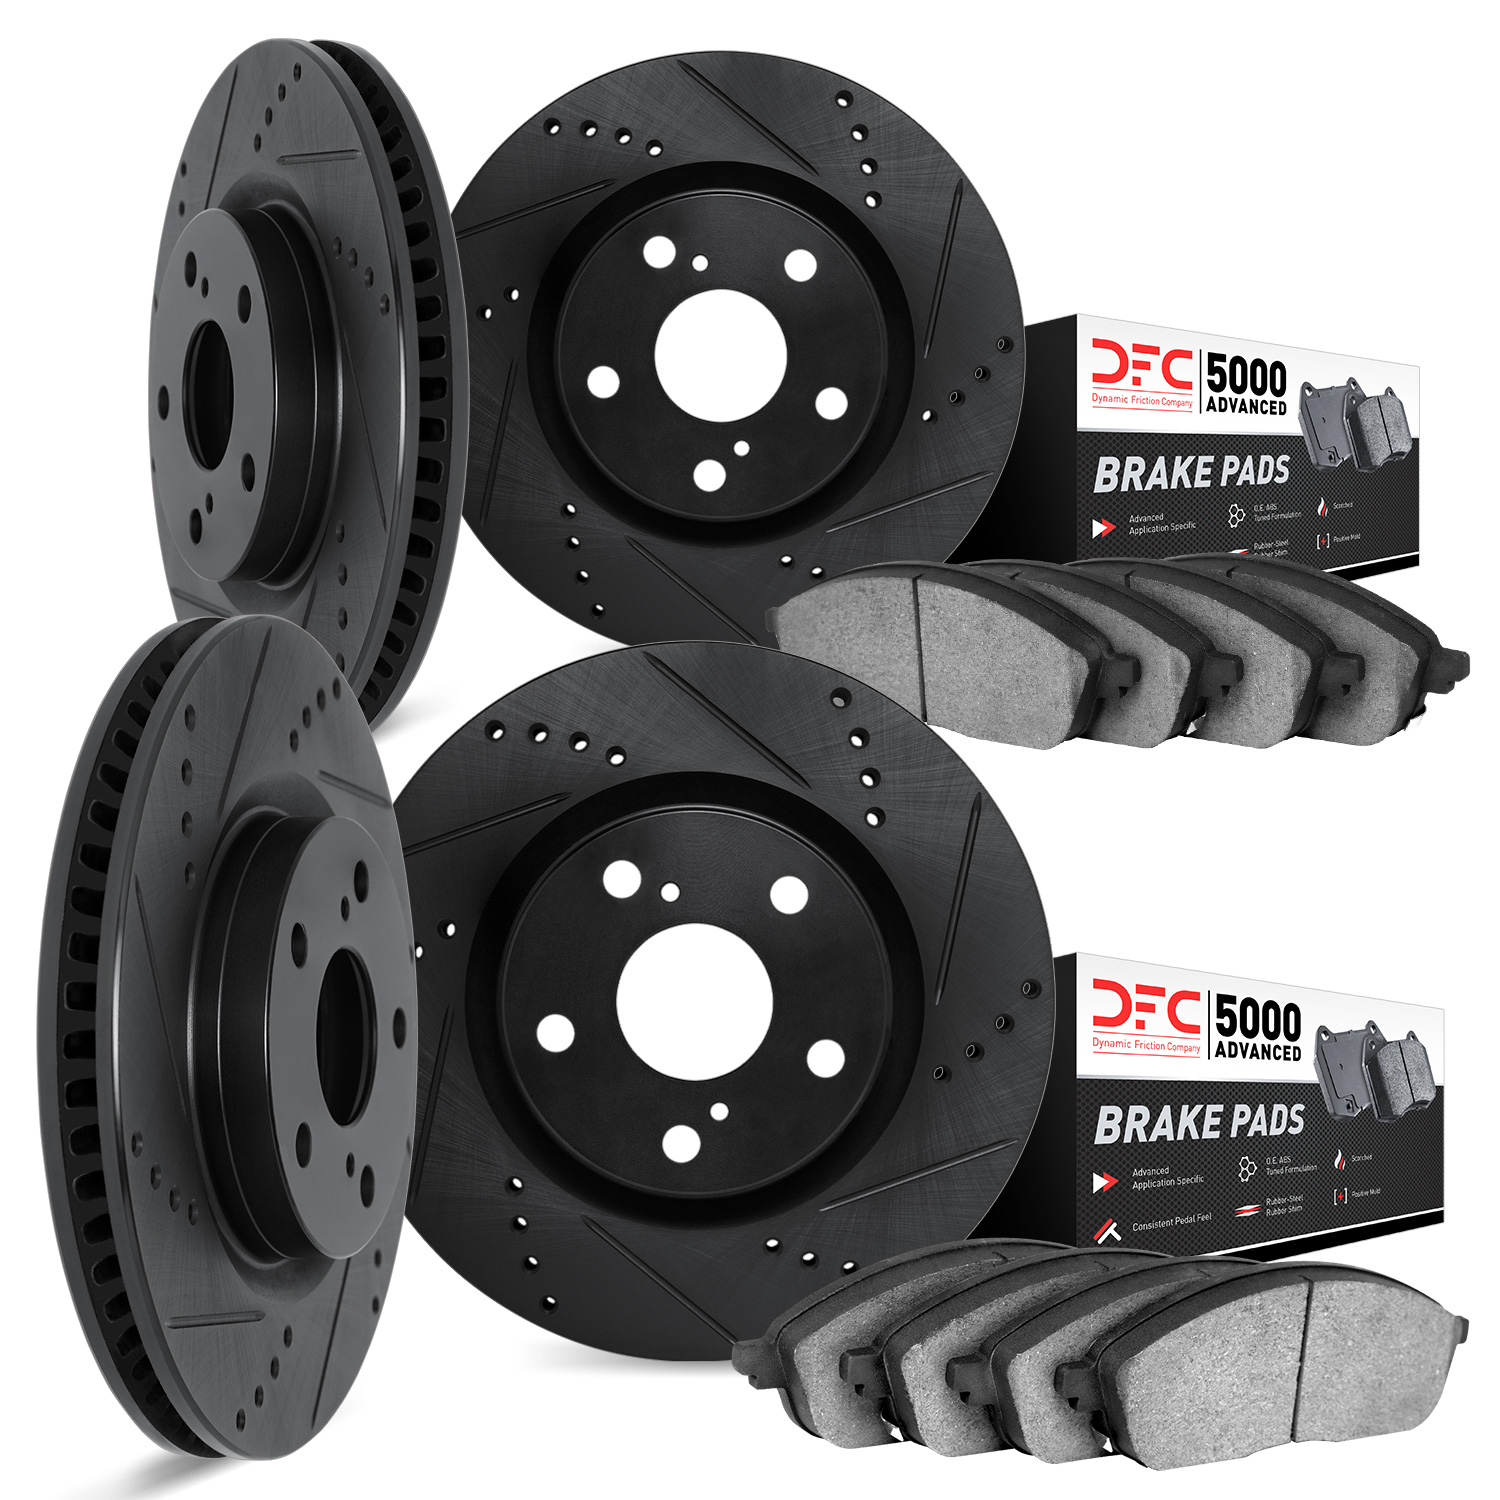 8504-20007 Drilled/Slotted Brake Rotors w/5000 Advanced Brake Pads Kit [Black], 2013-2015 Jaguar, Position: Front and Rear